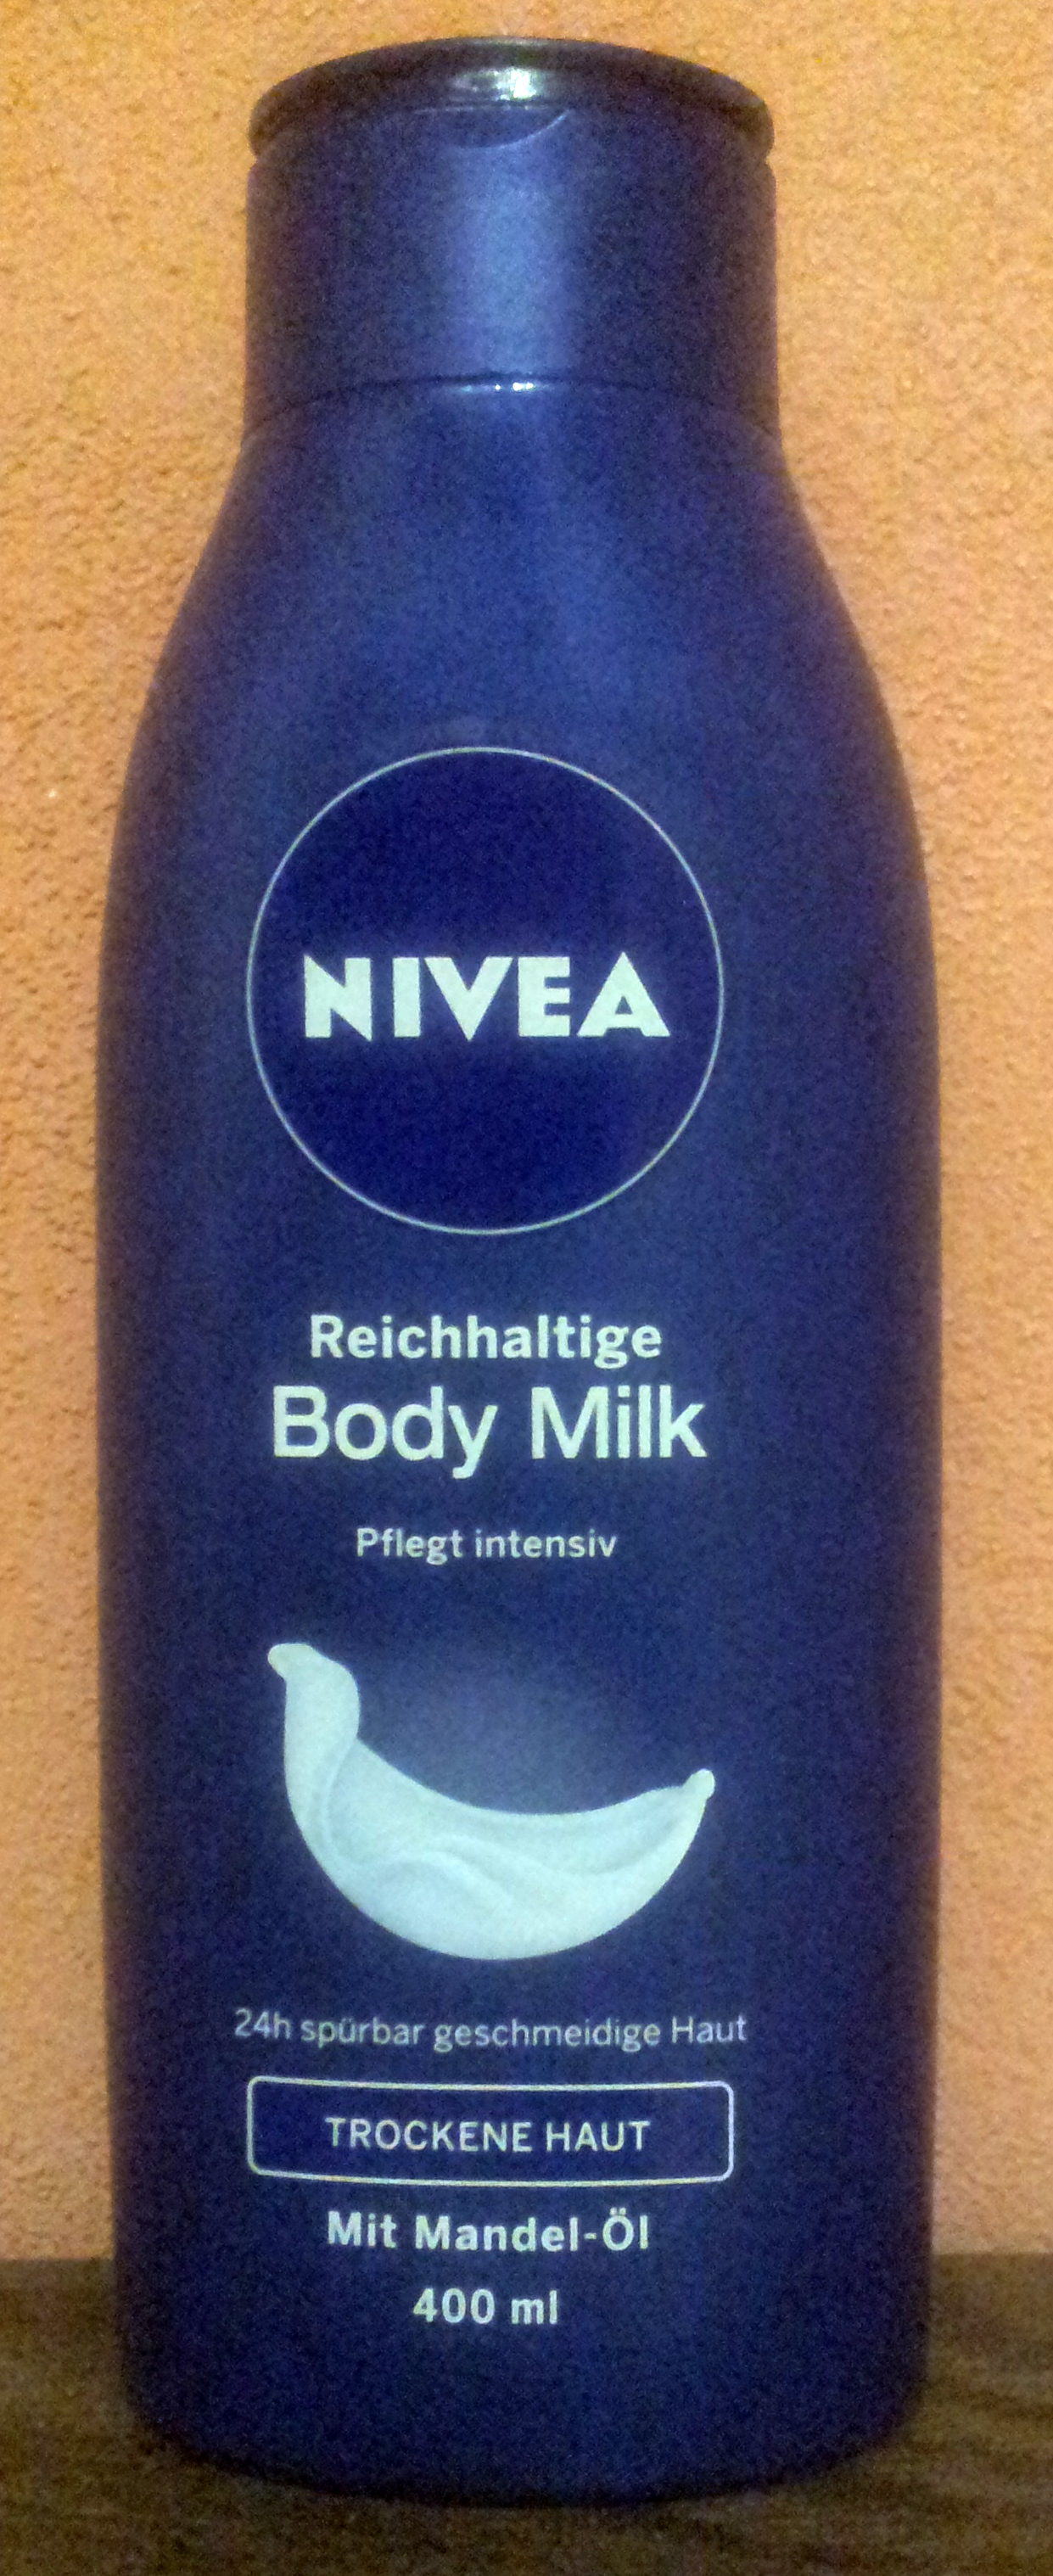 Nivea Body Milk - Product - de